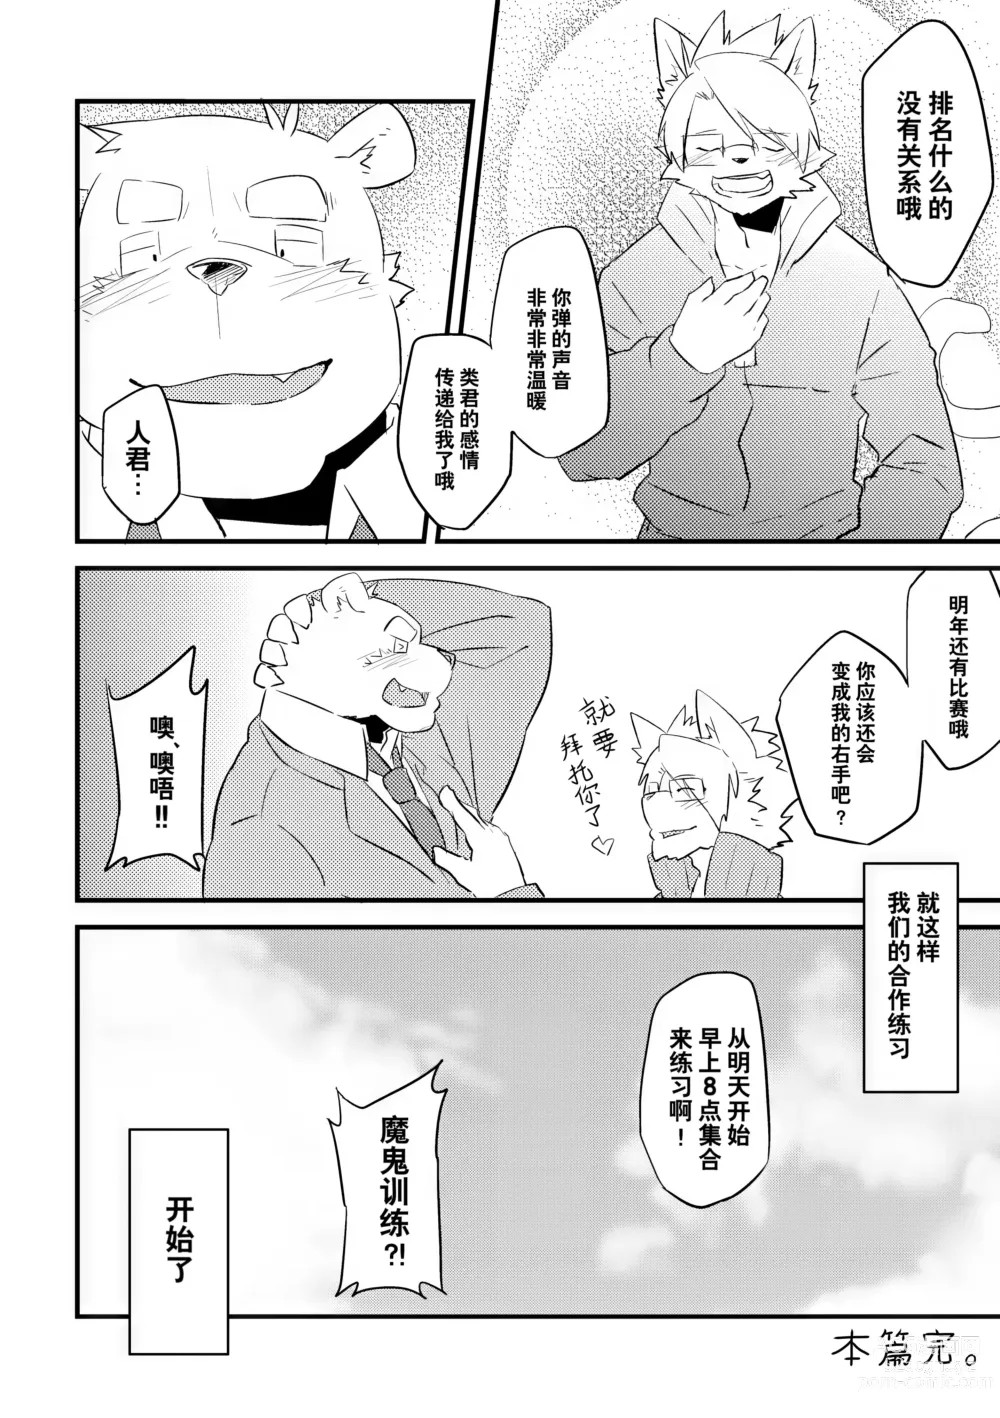 Page 23 of doujinshi 右手的恋人